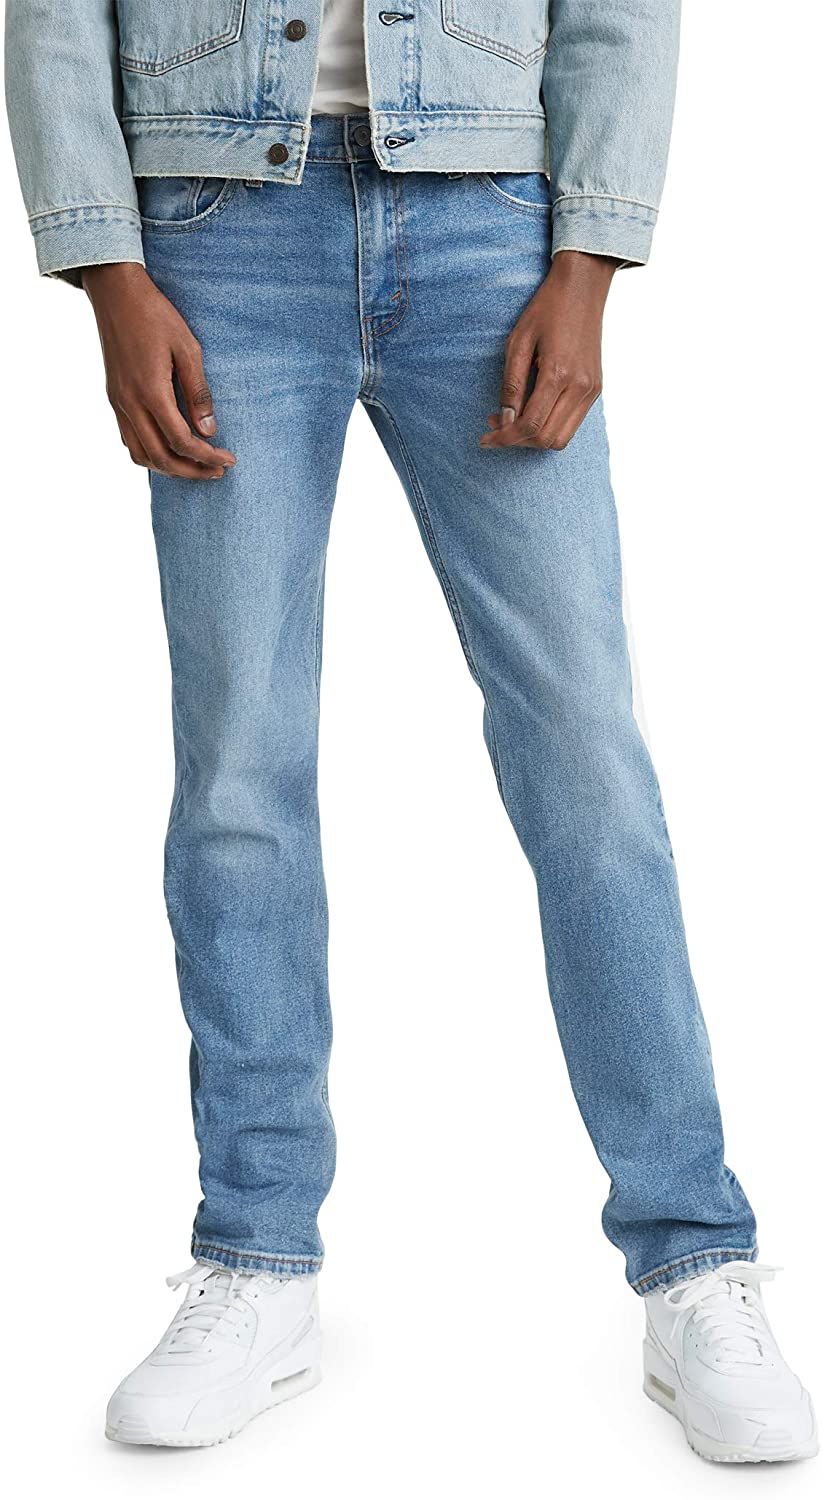 Shop The Best Quality Mens Slim Fit Denim Jeans Kenya